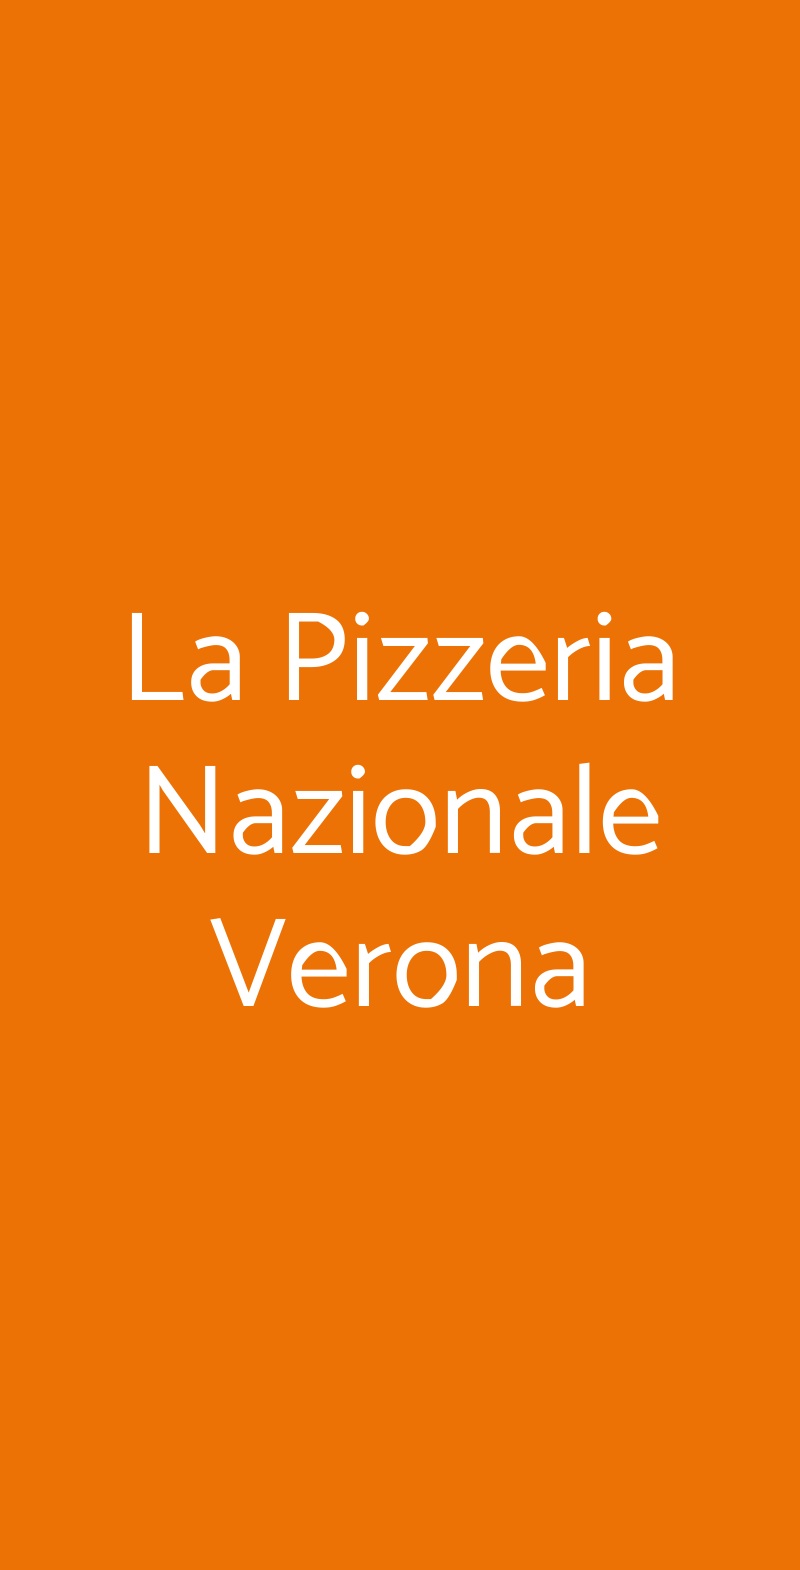 La Pizzeria Nazionale Verona Verona menù 1 pagina